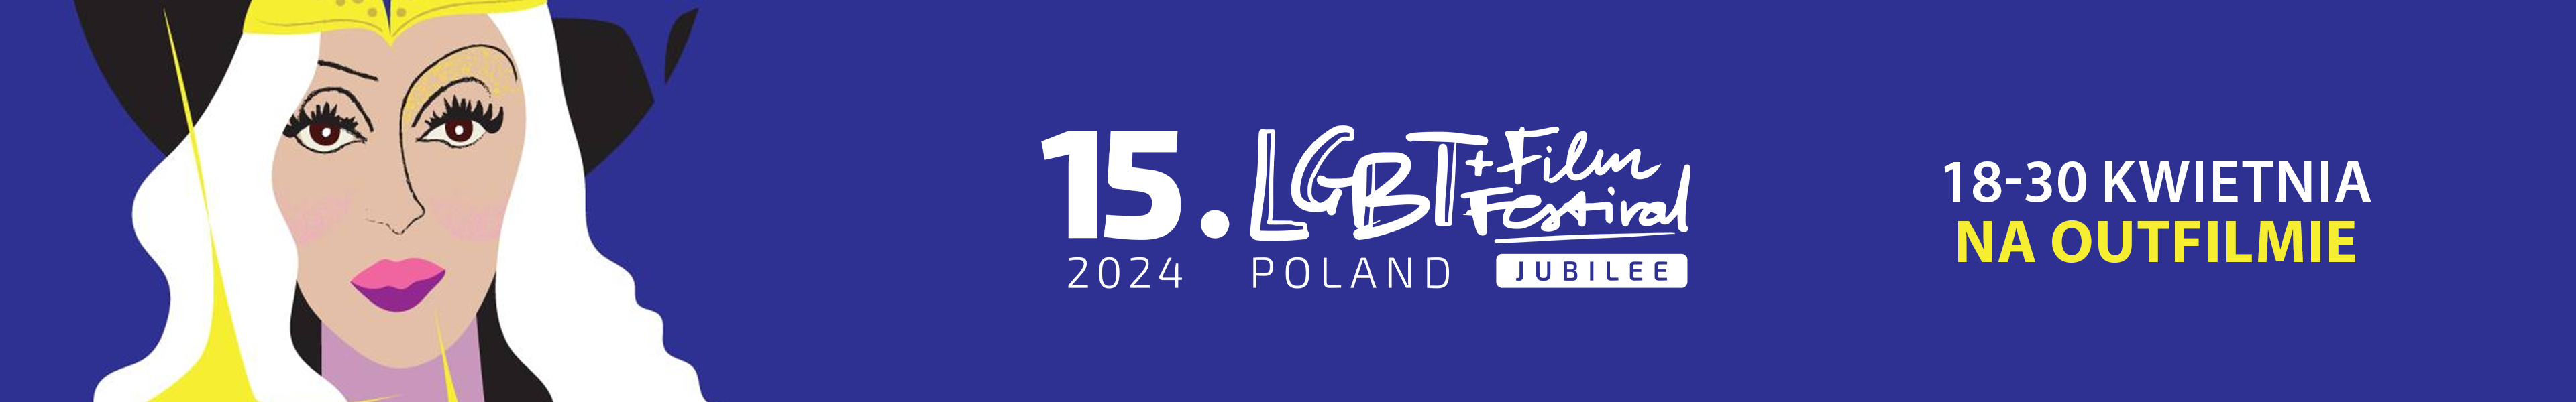 LGBT+ Film Festival na Outfilmie